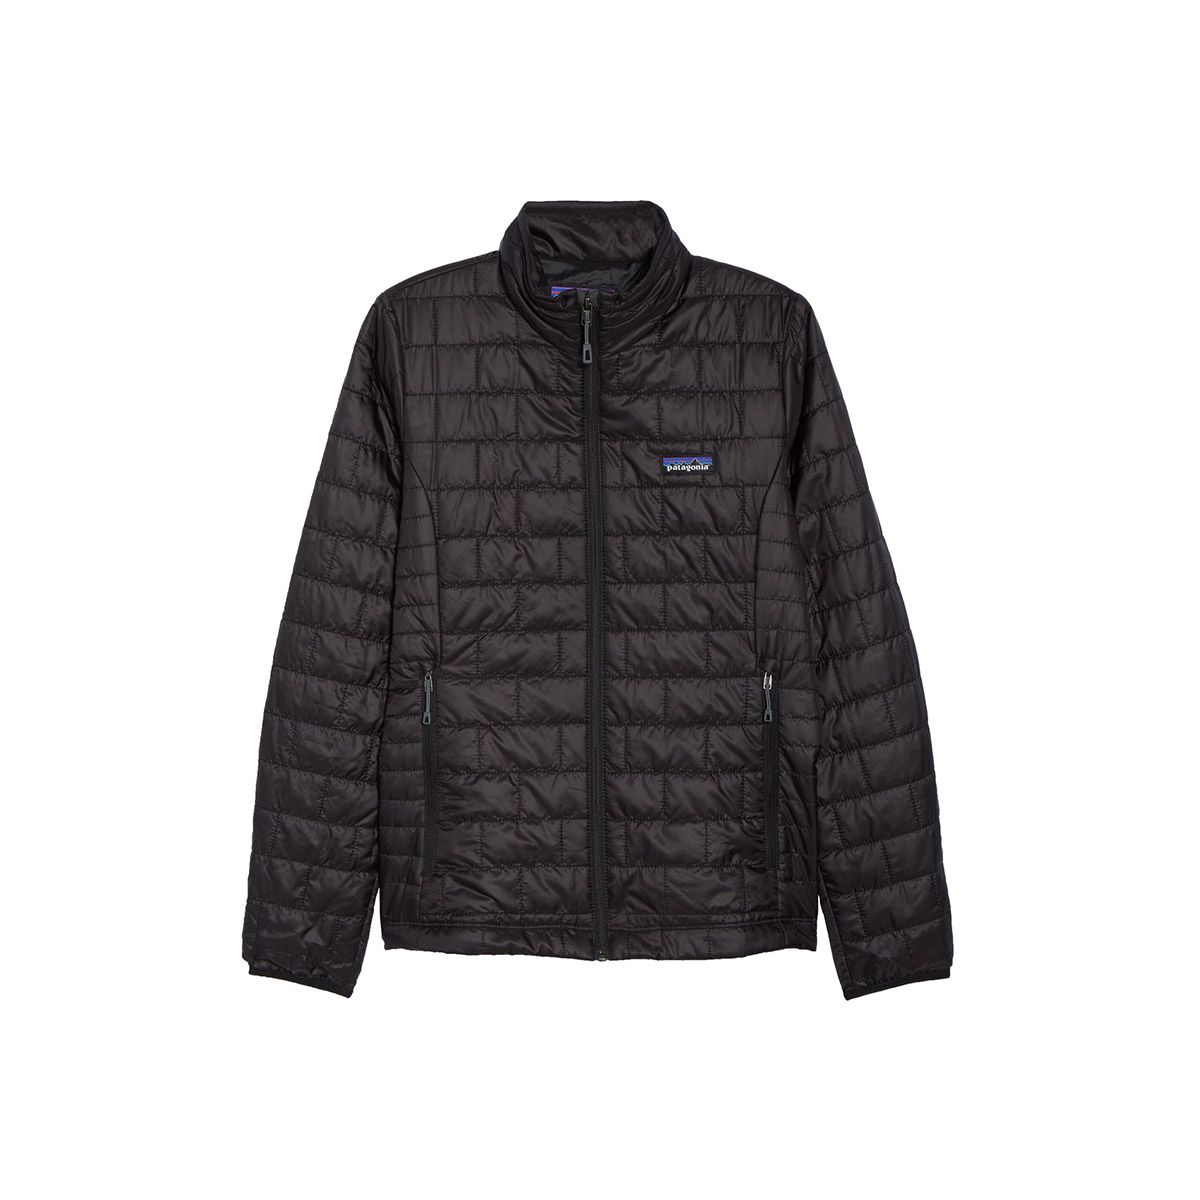 julia-robert-patagonia-jacket-winter-essential